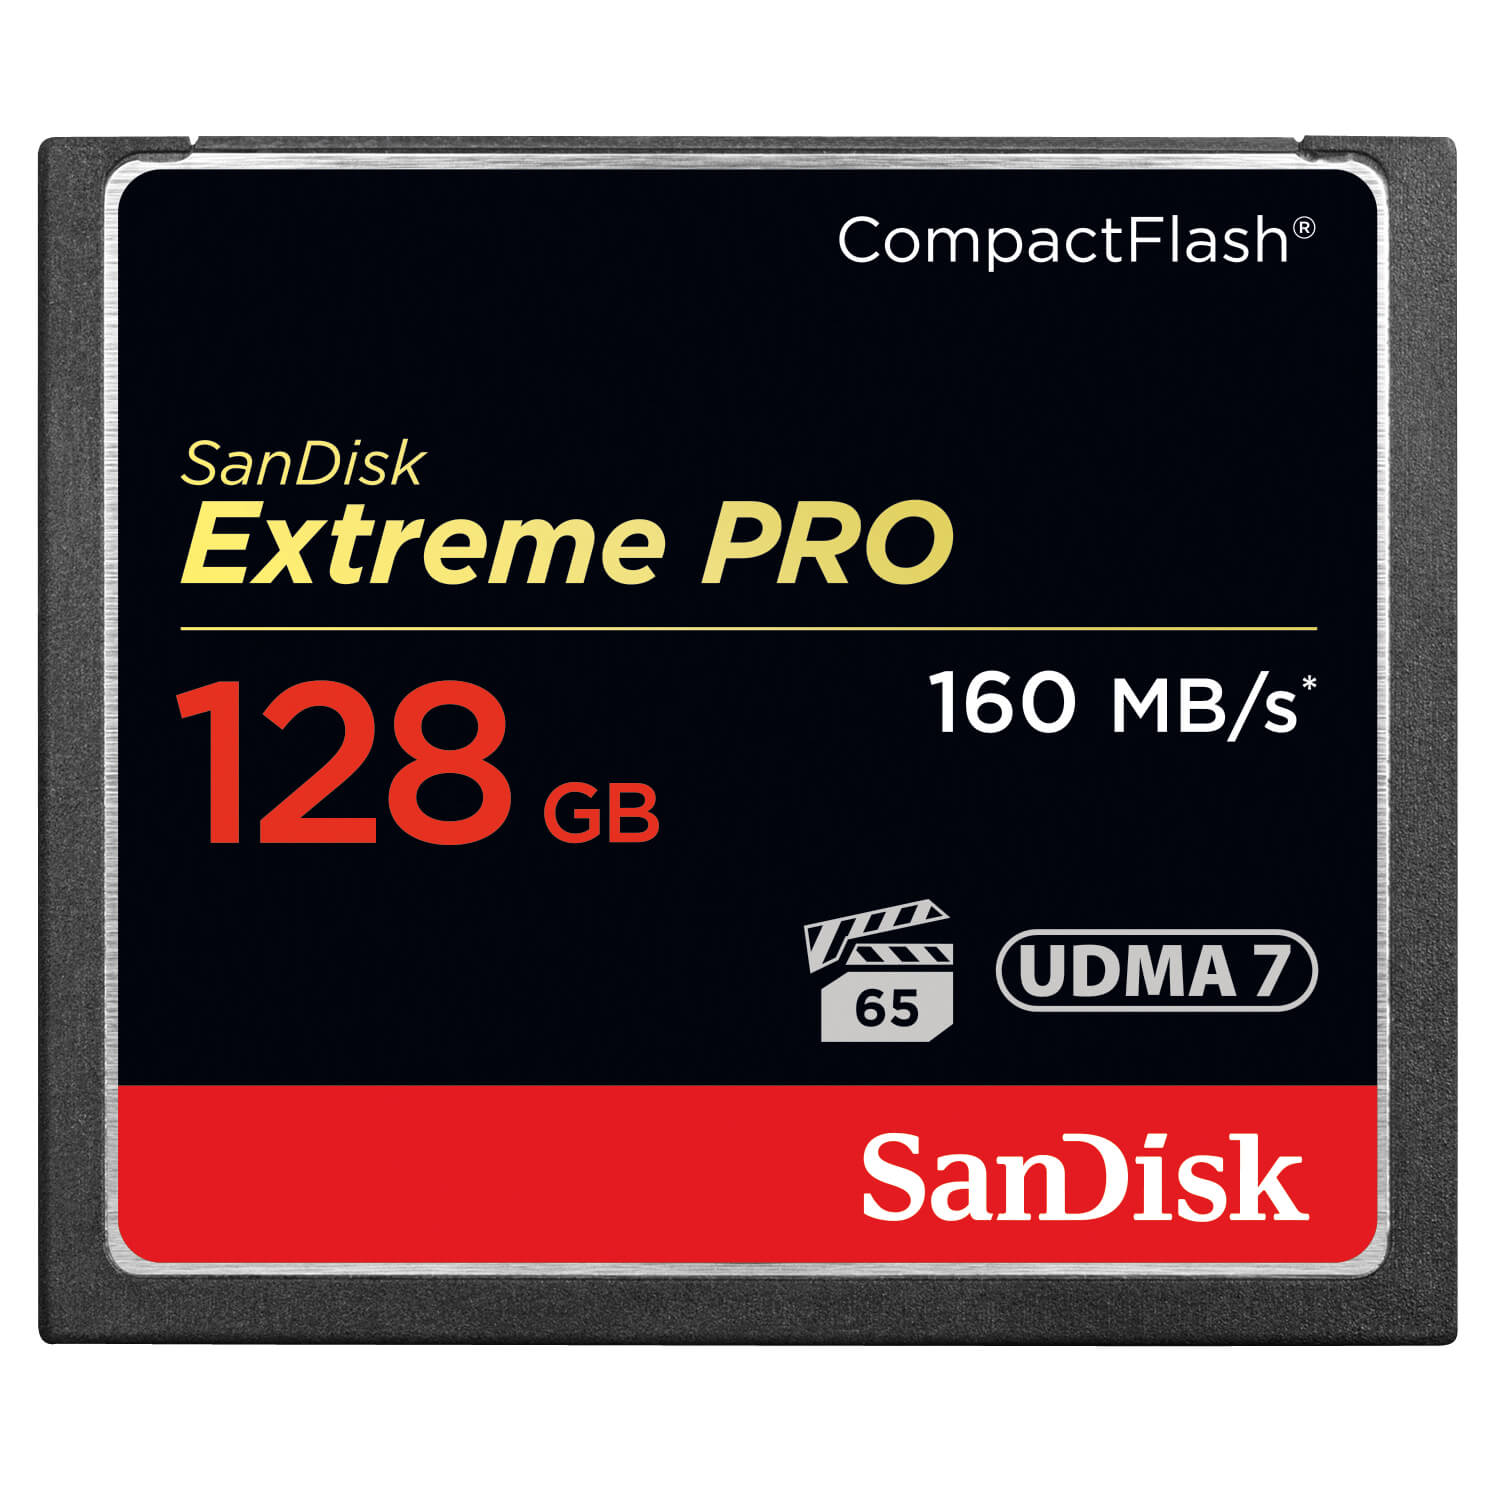 Sandisk Extreme Pro CF 128GB 160MB/s UDMA 7